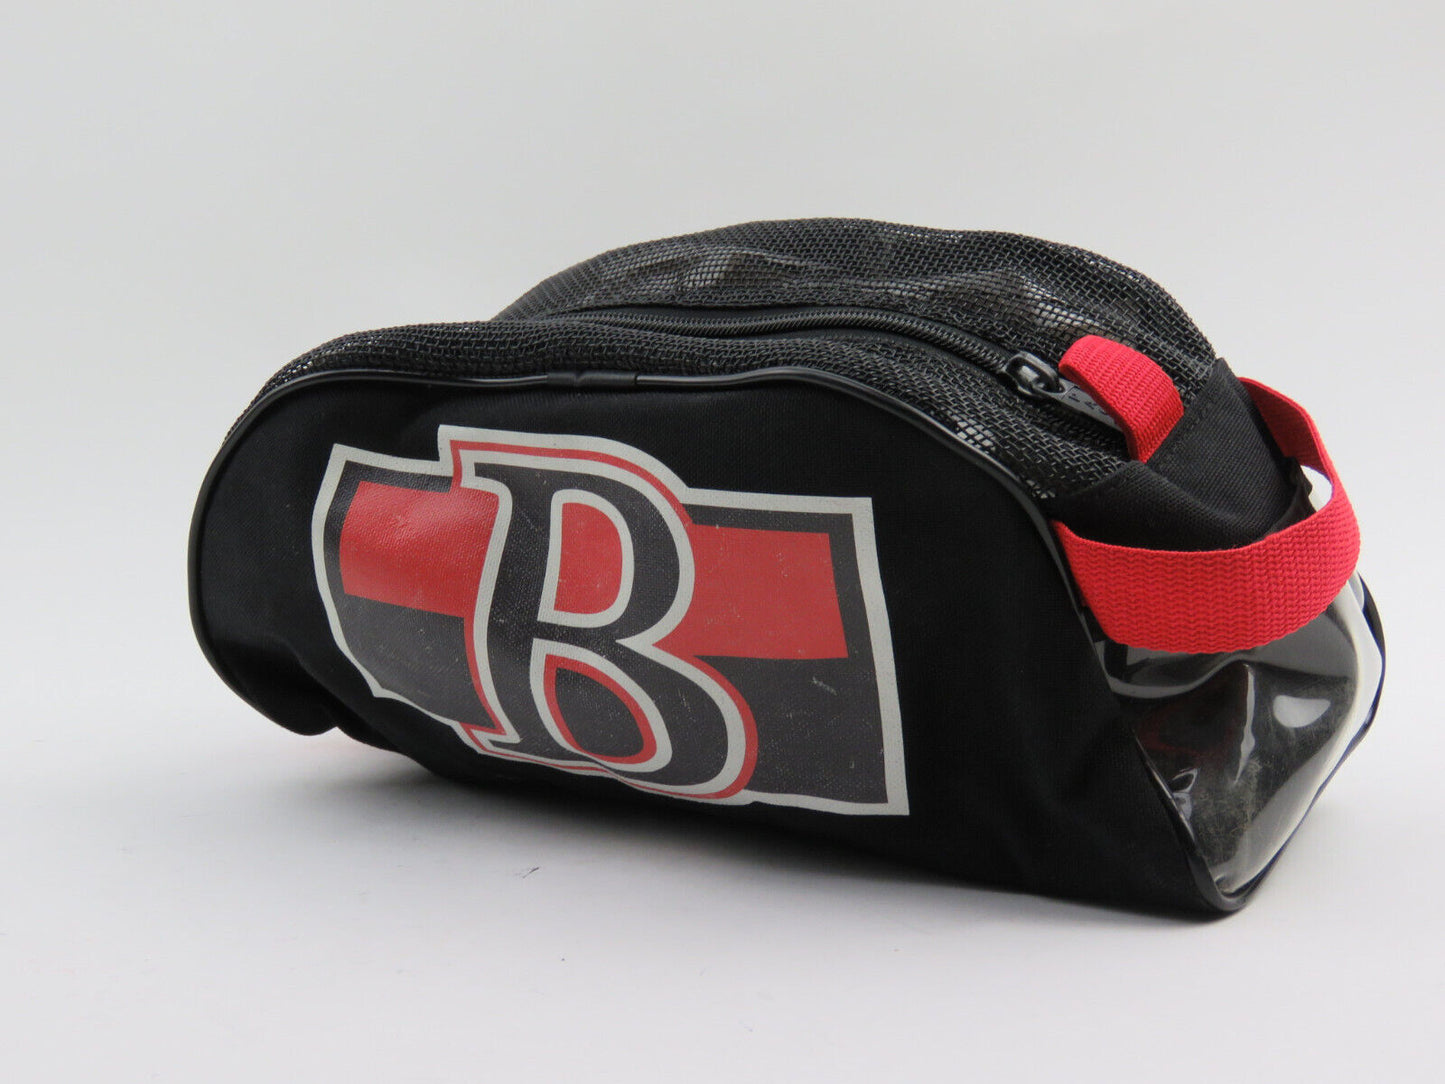 Belleville Ottawa Senators AHL Pro Stock Hockey Player Issued Team Toiletry Bag